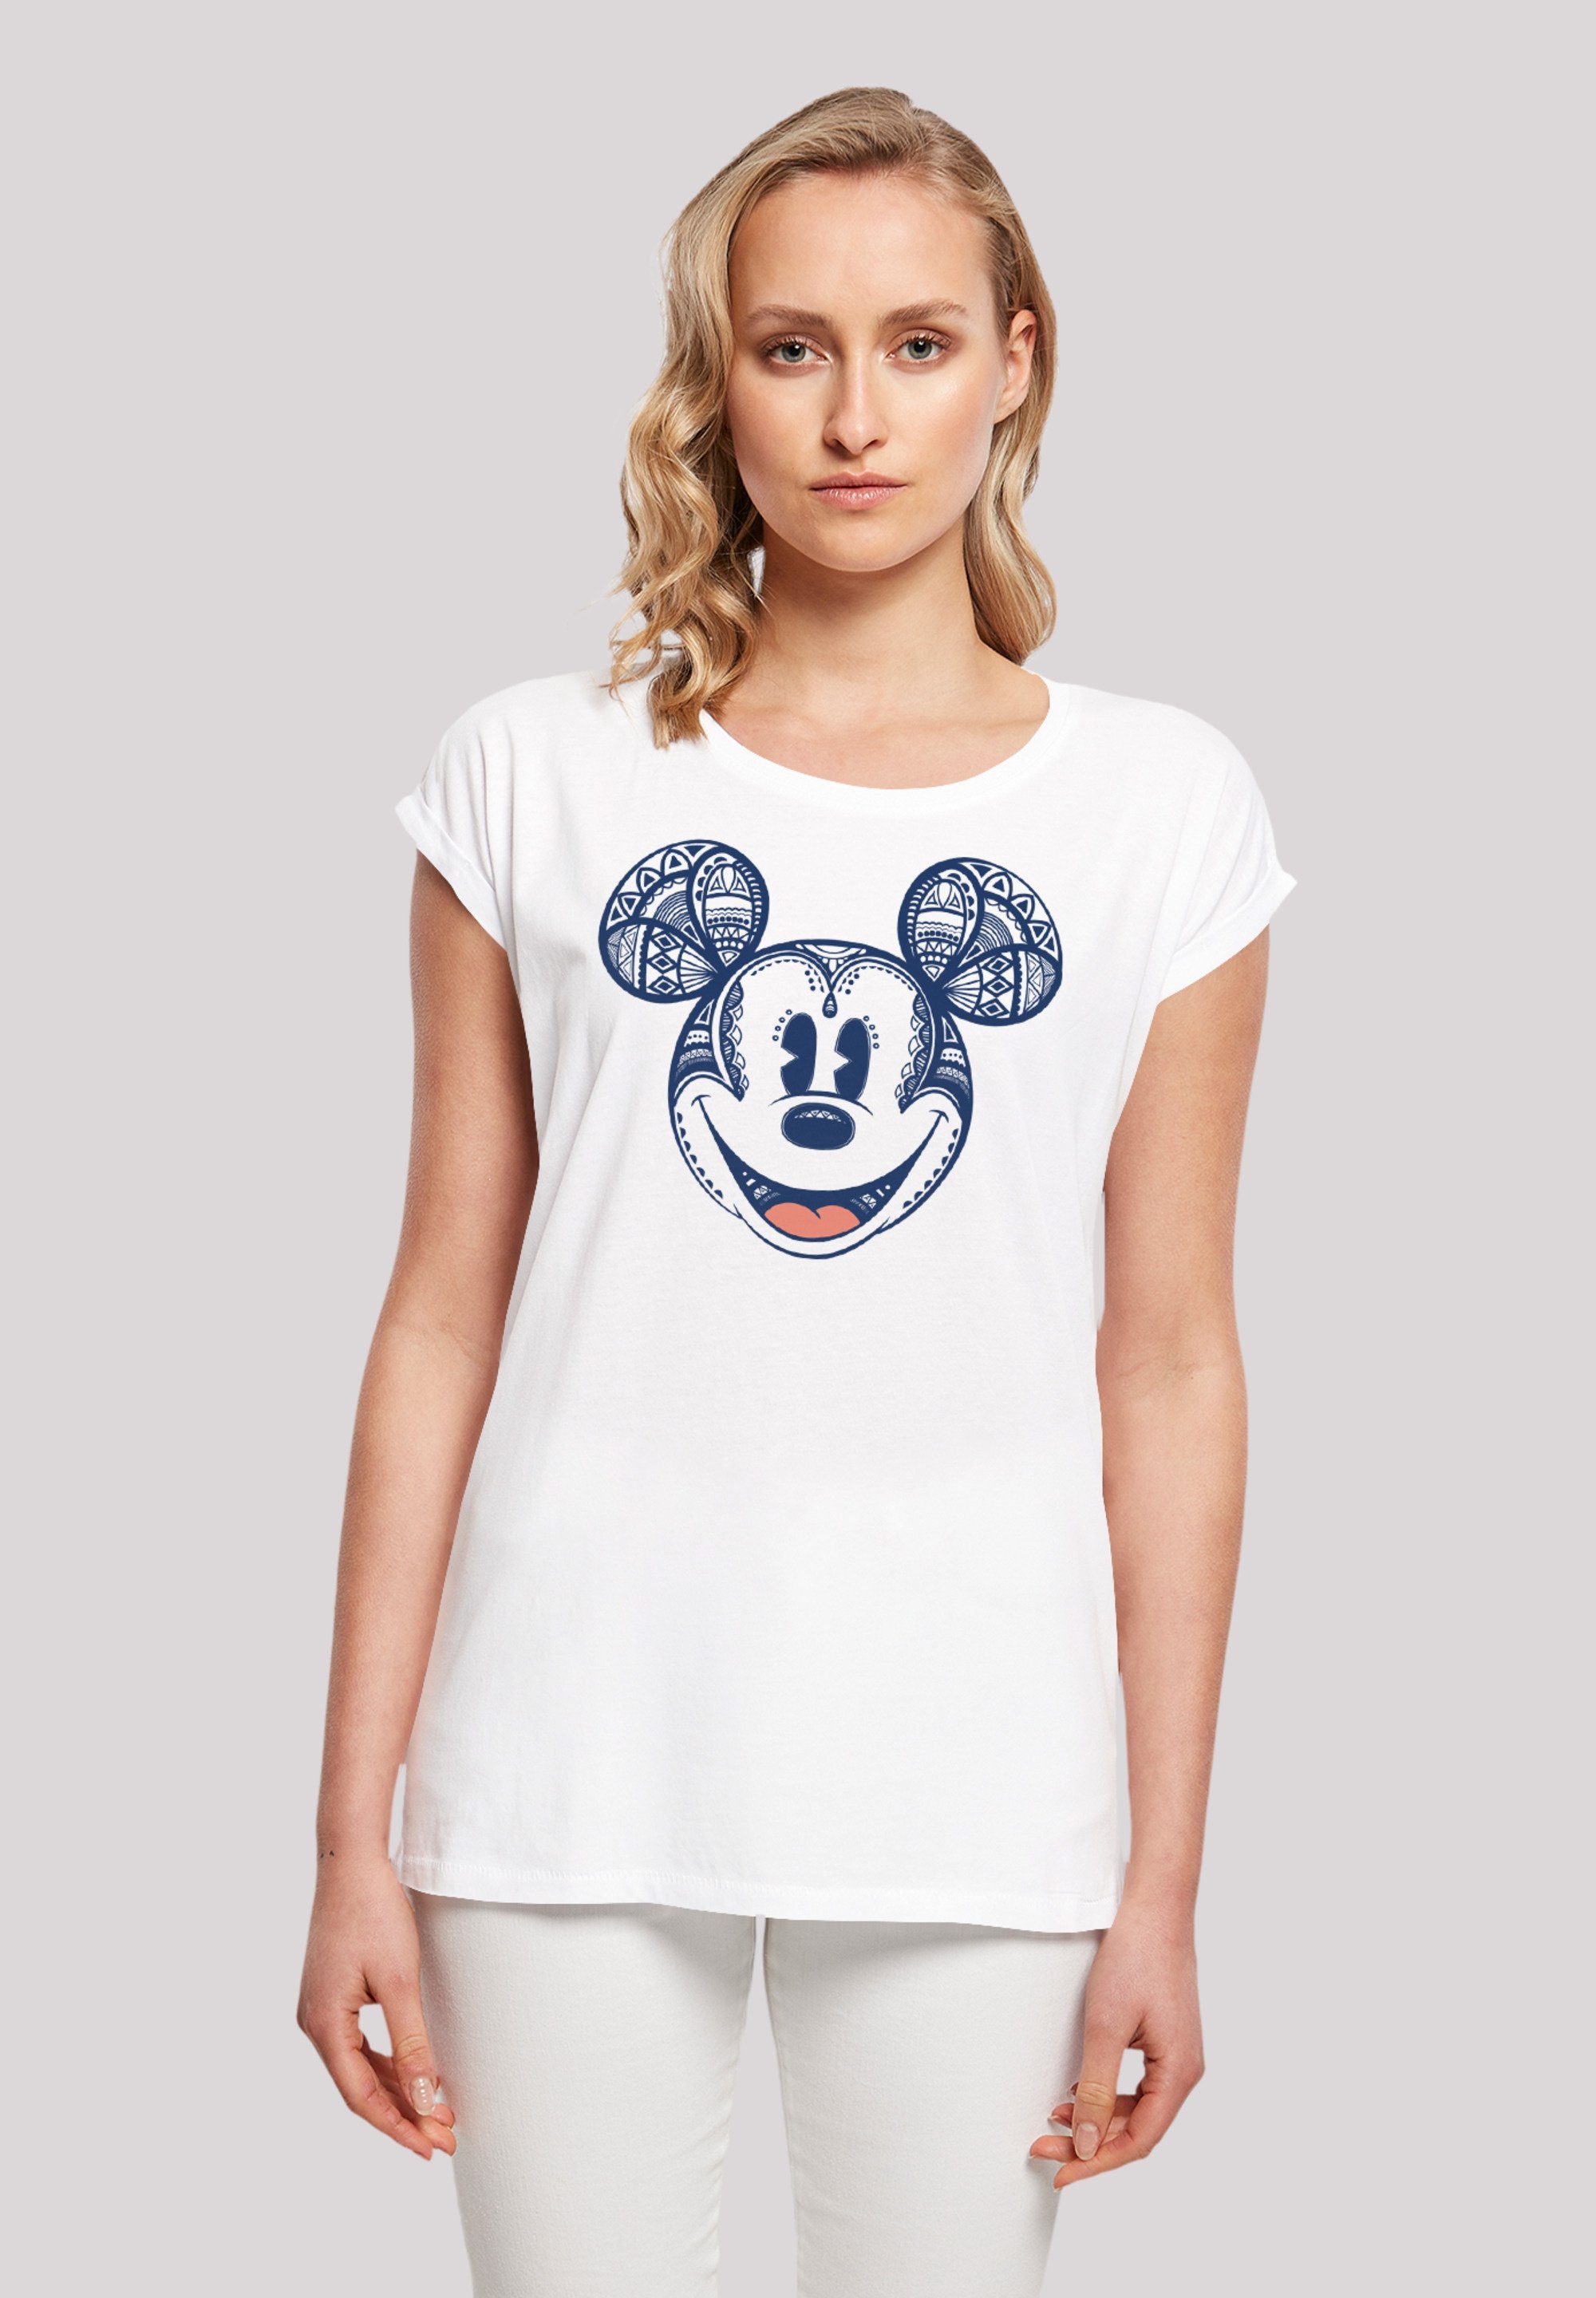 F4NT4STIC T-Shirt Premium Qualität, Disney Tribal T-Shirt Maus Disney Offiziell Micky lizenziertes